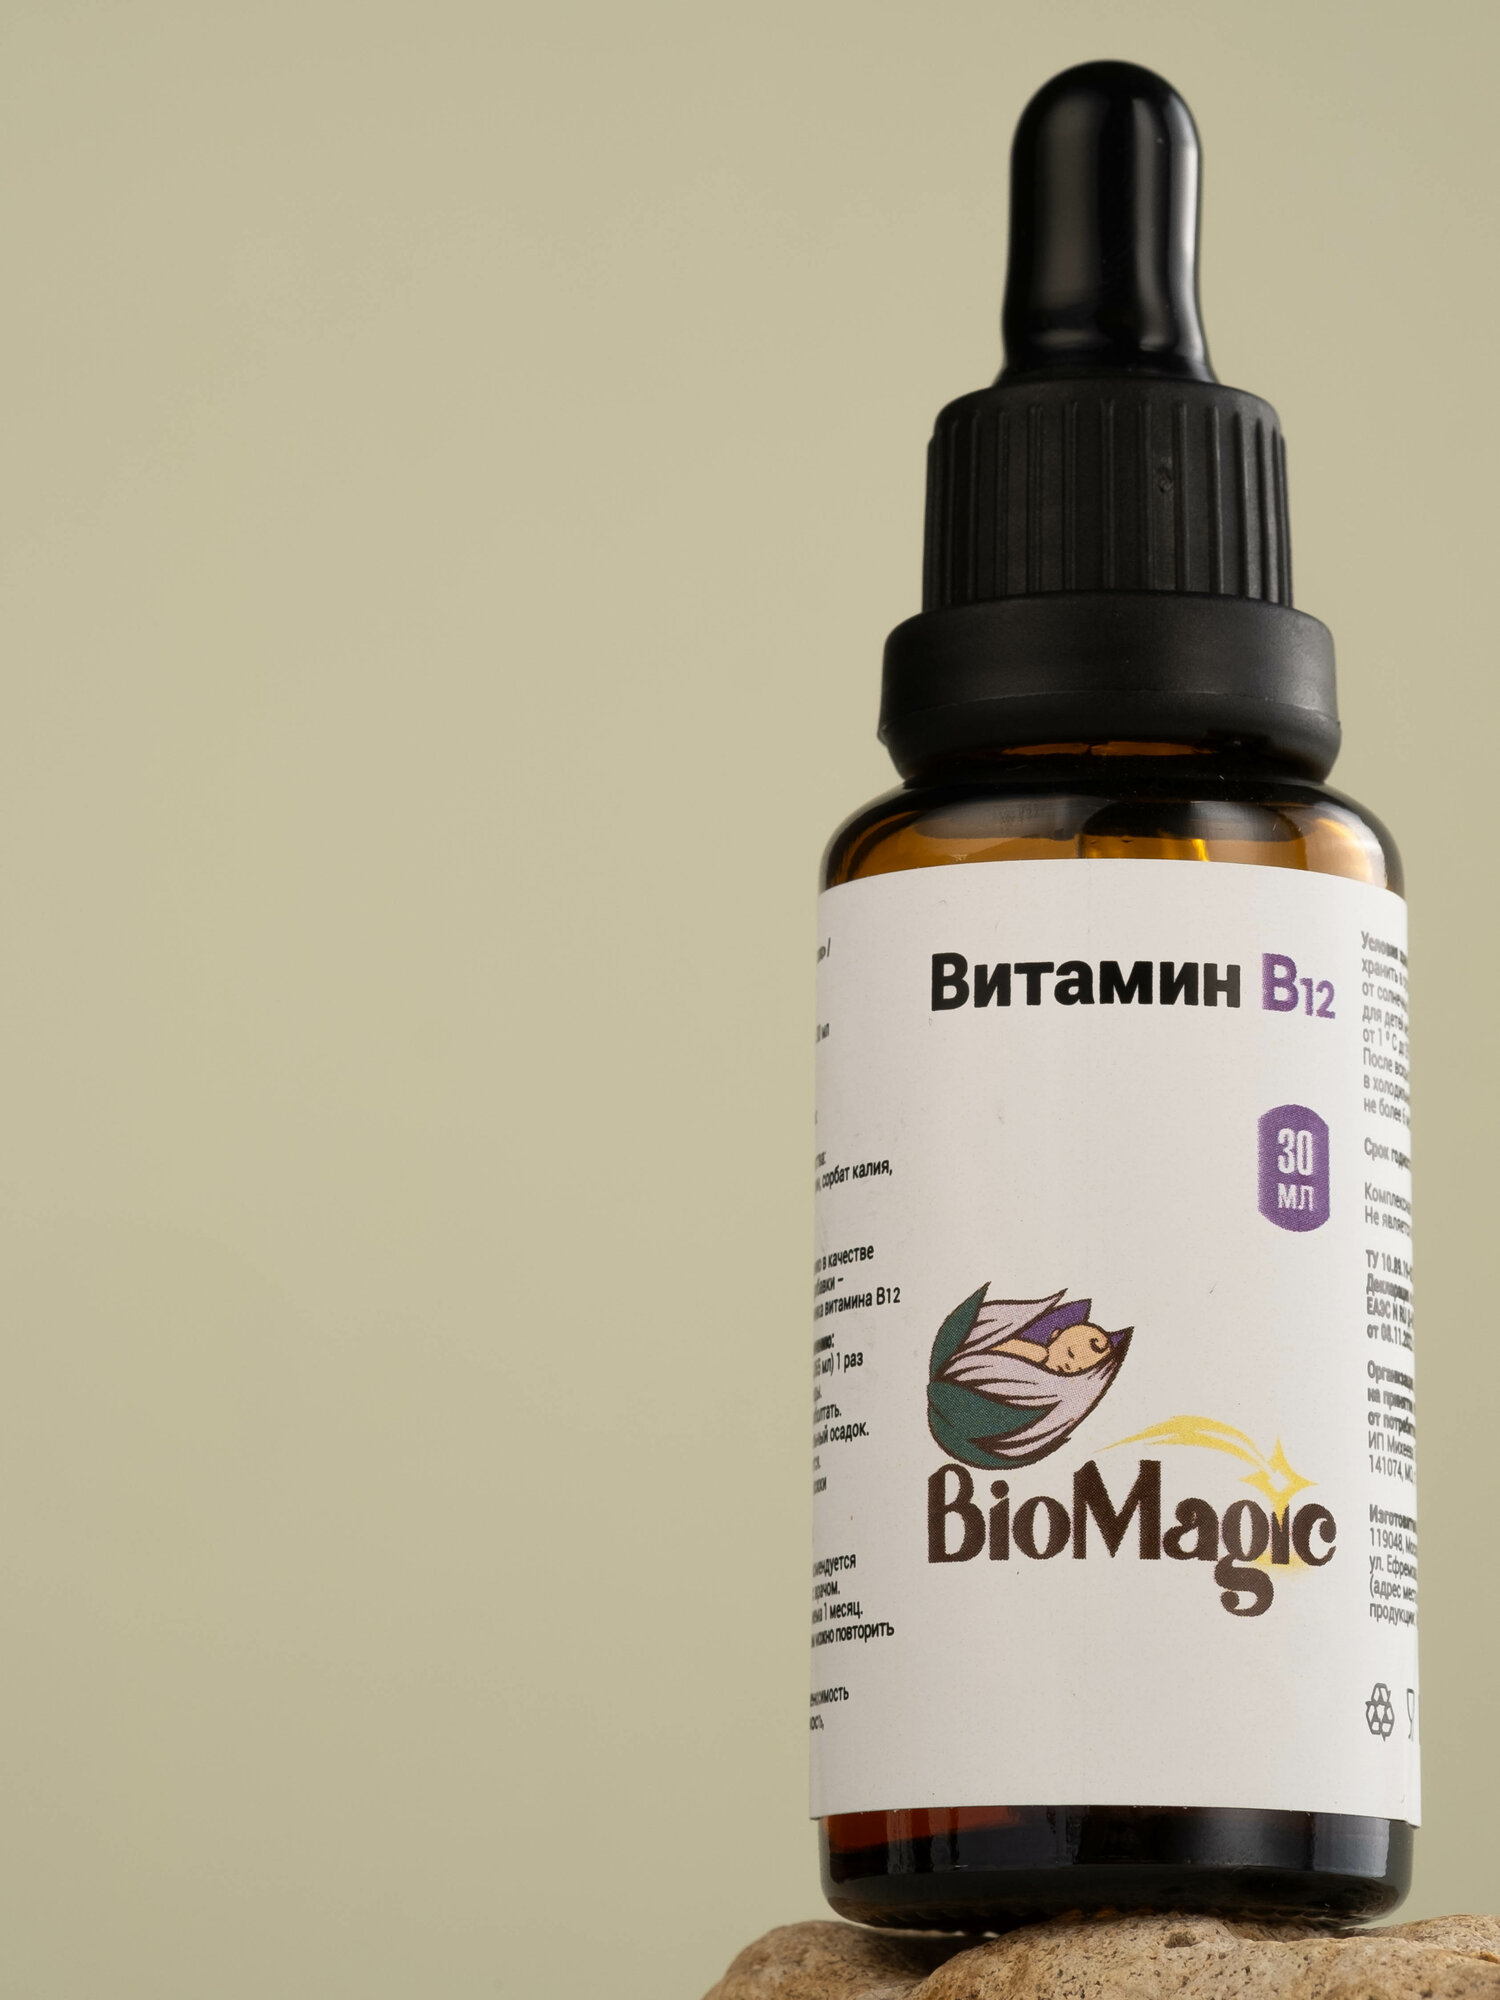 BioMagic, Витамин B12, аденозилкобаламин, 30 мл